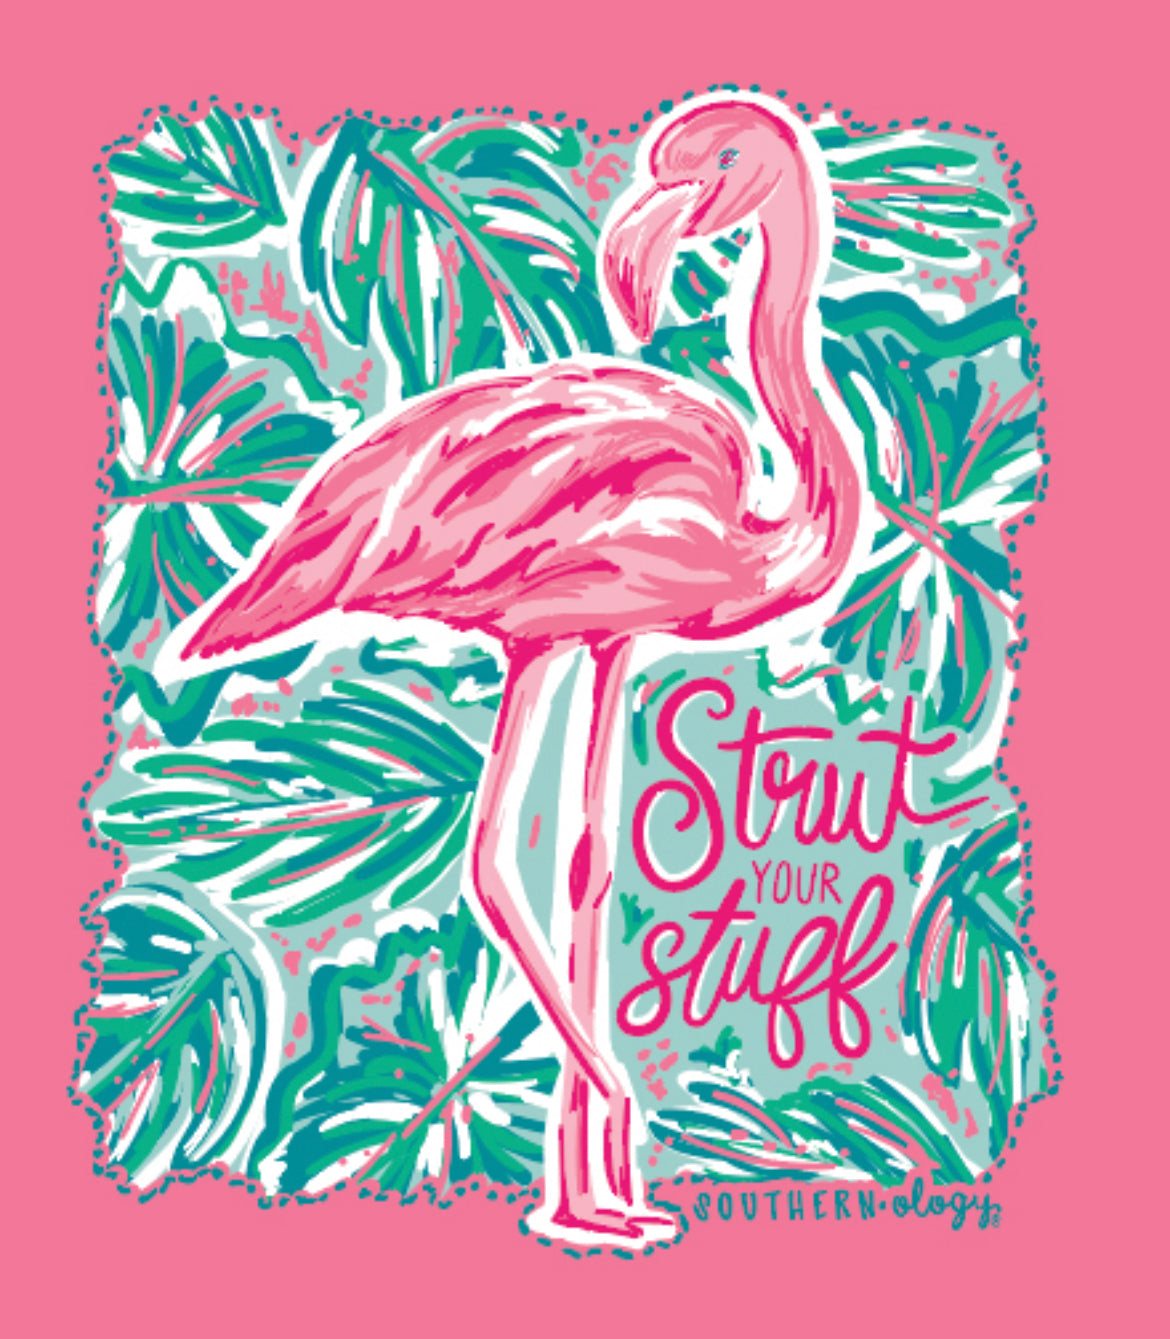 Southernology SS Flamingo Strut Your Stuff Tshirt*